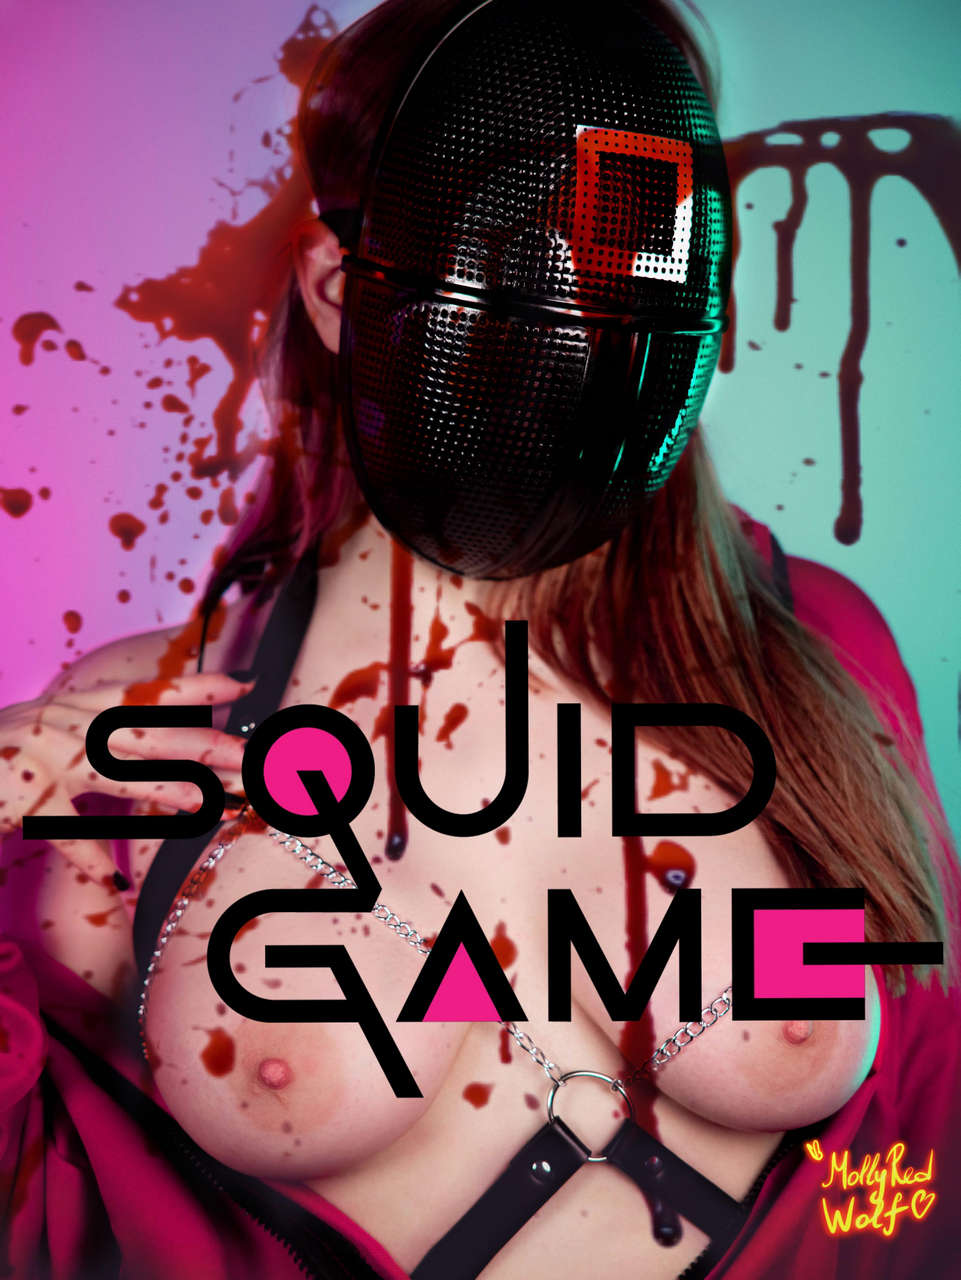 Squid Game By Mollyredwol